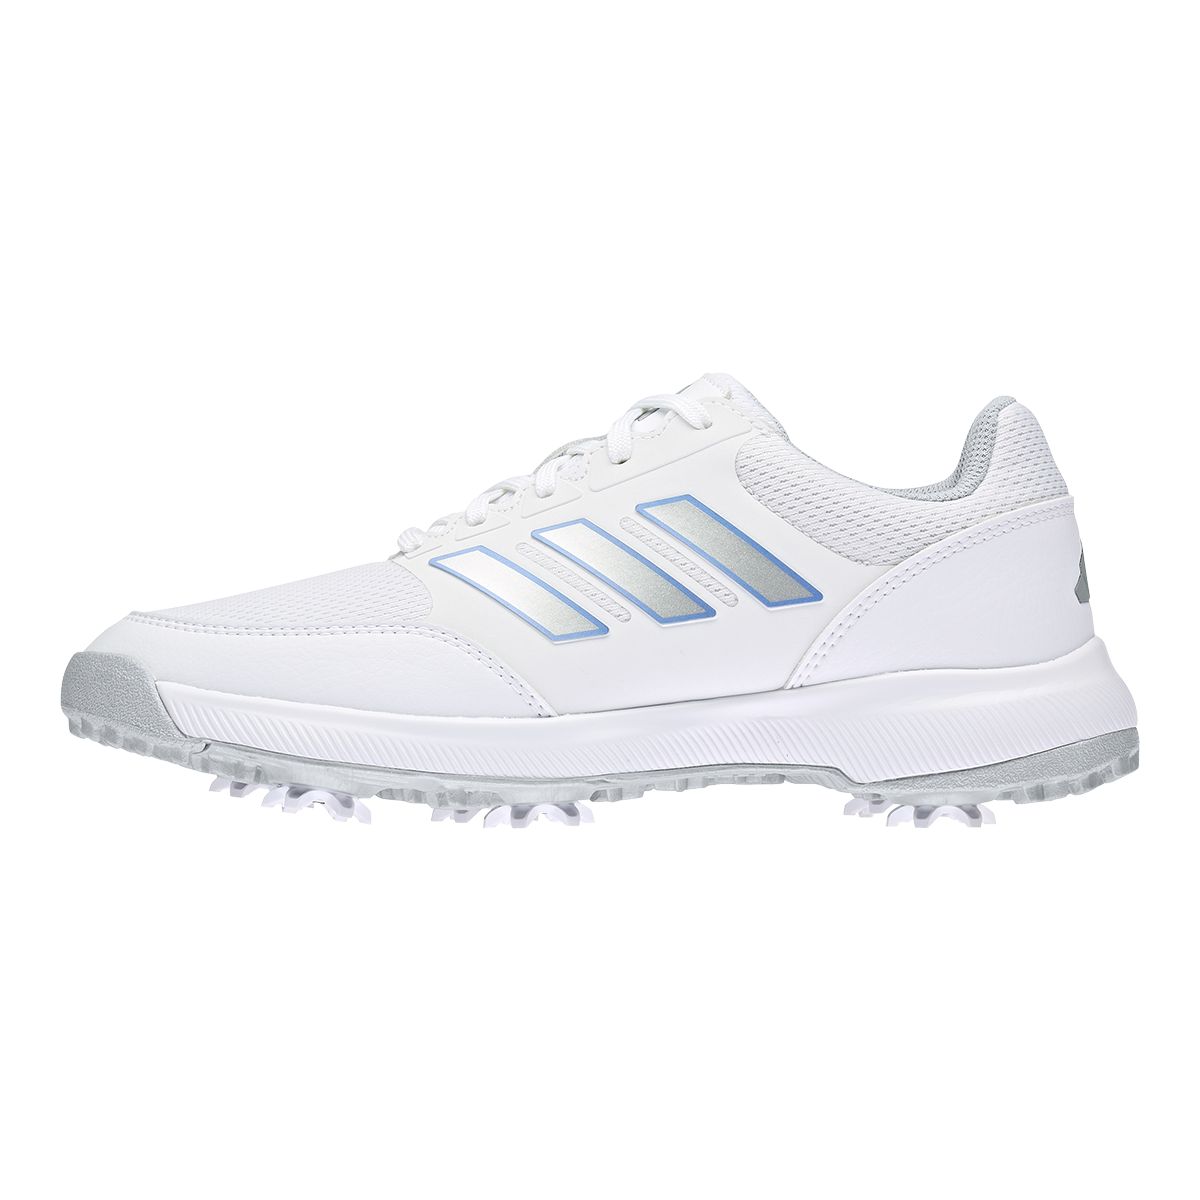 Image of adidas Golf Women's Tech Response 3.0 Golf Shoes